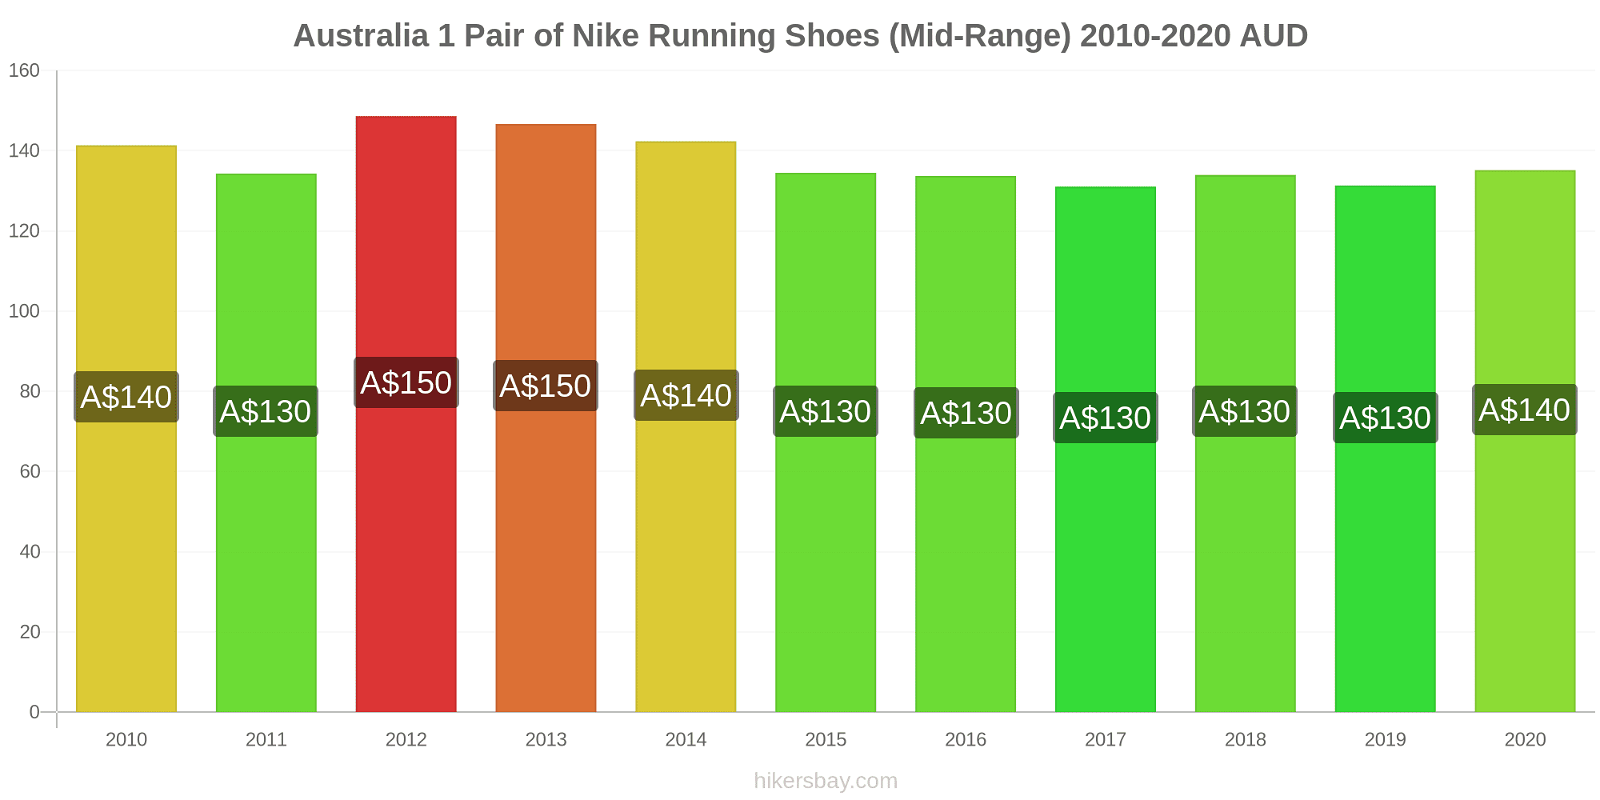 Australia price changes 1 Pair of Nike Running Shoes (Mid-Range) hikersbay.com